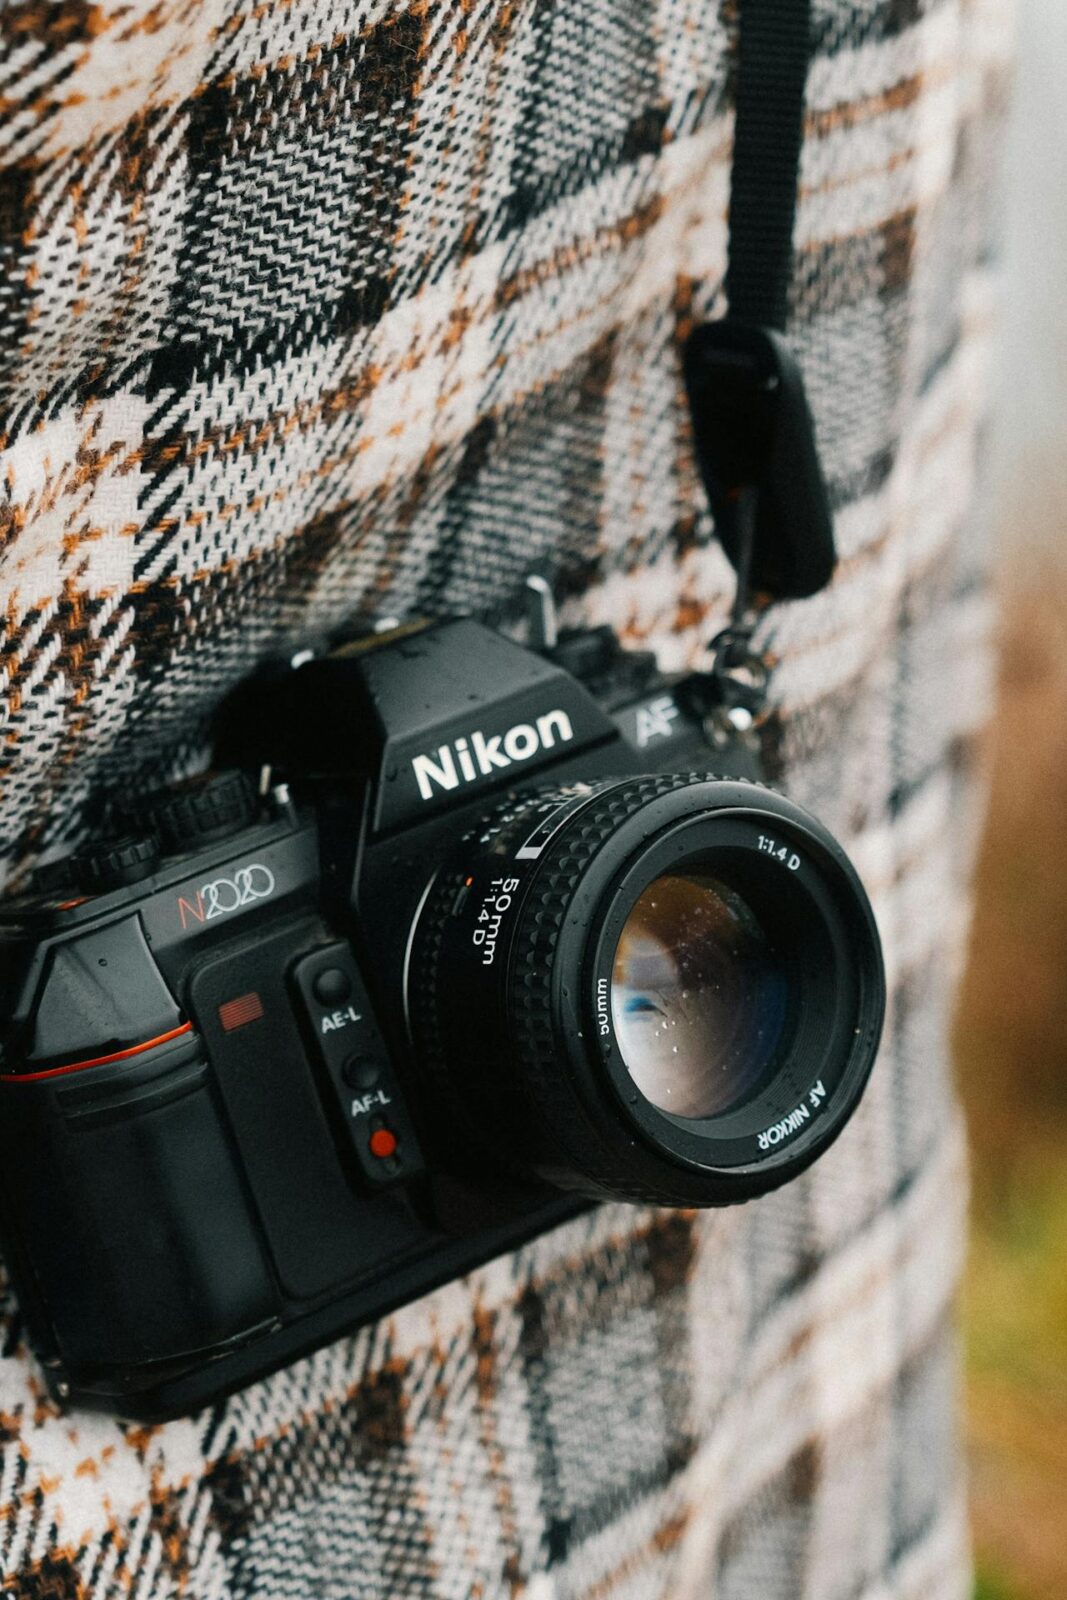 Nikon camera image for iPhone